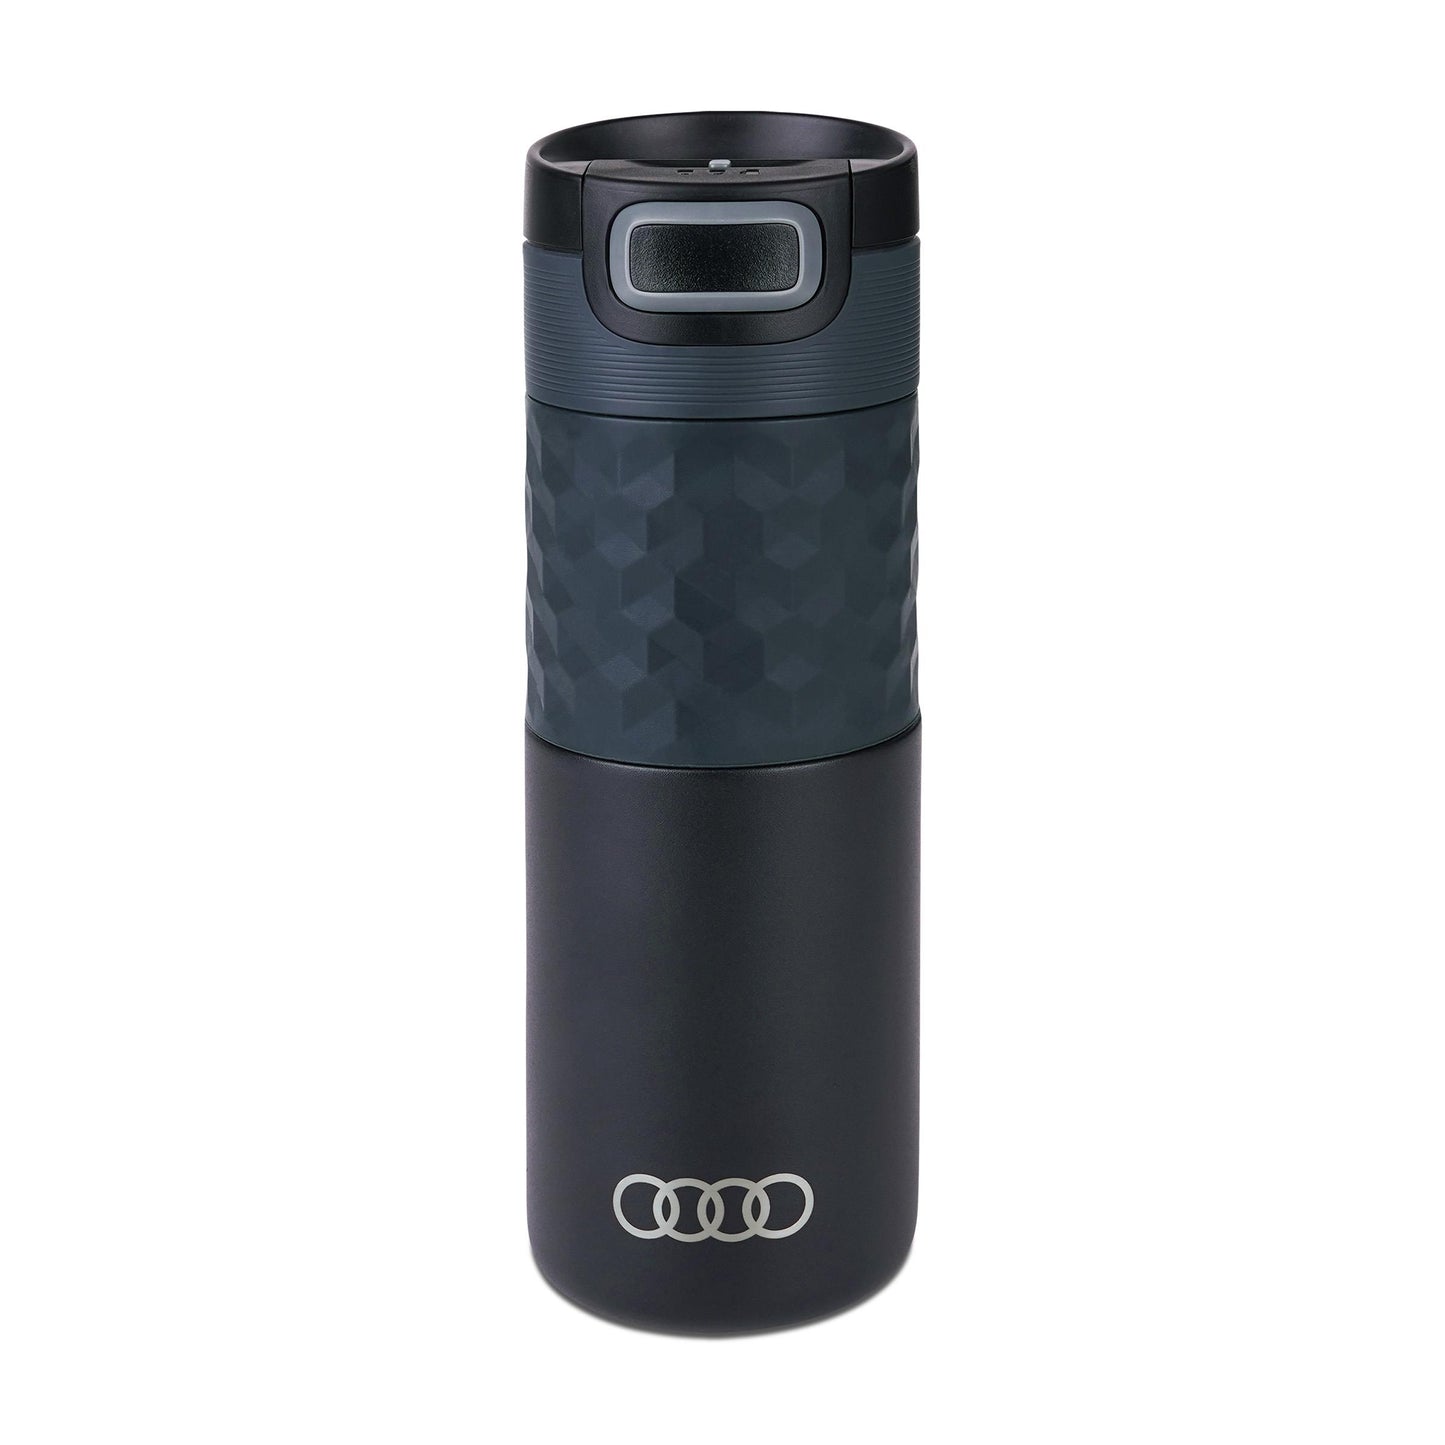 Audi Insulated mug, stainless steel, black